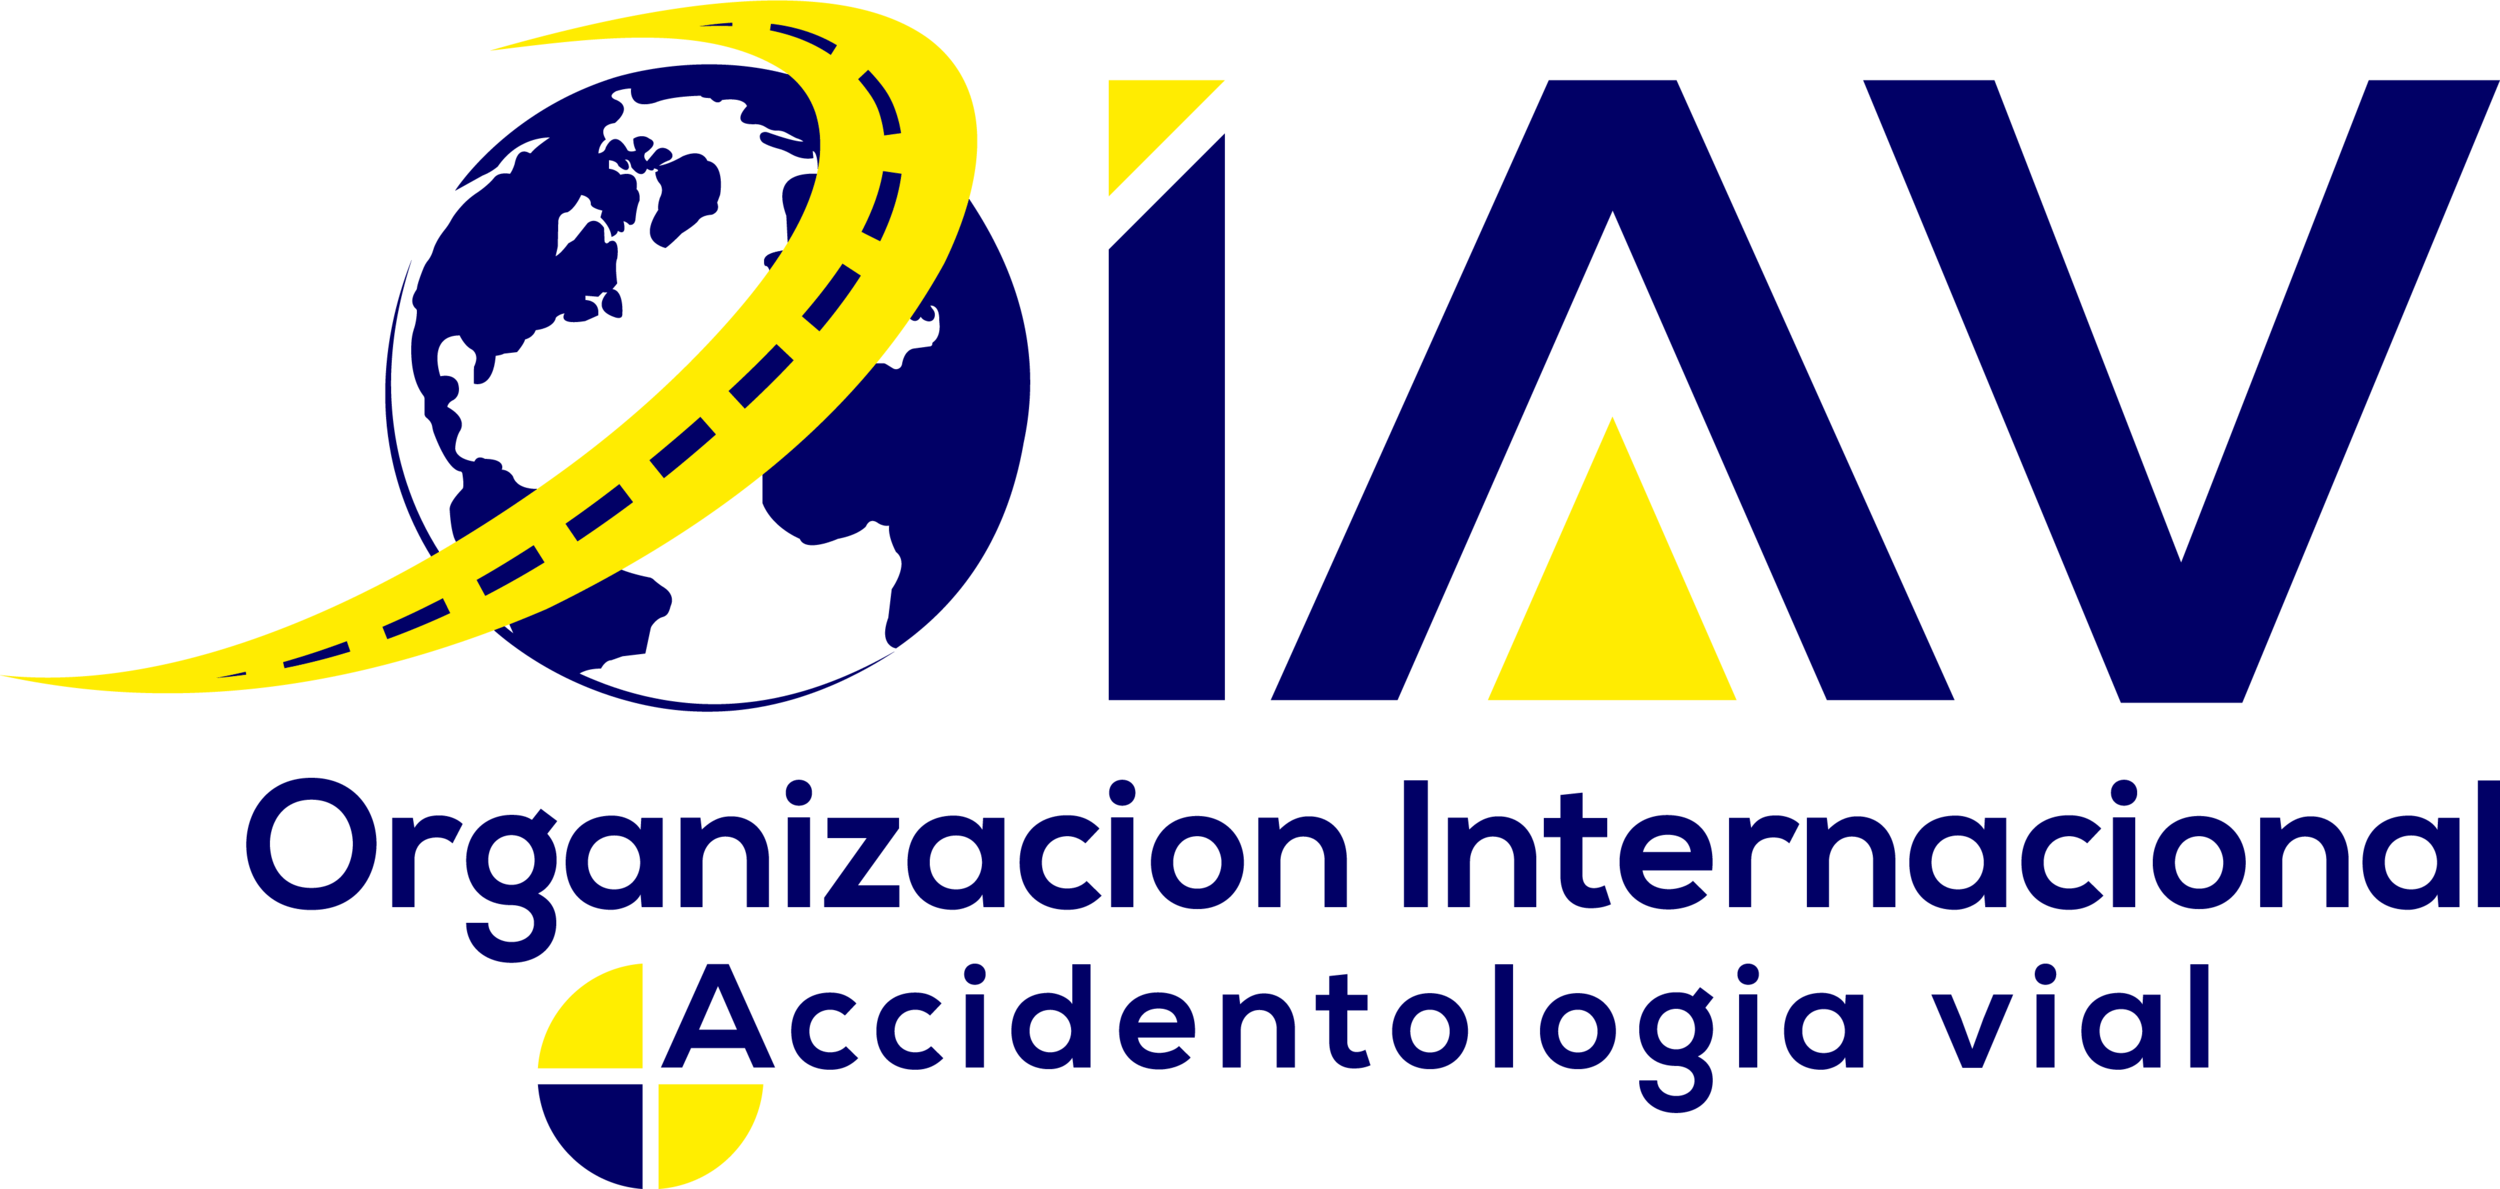 Organización Internacional Accidentología Vial